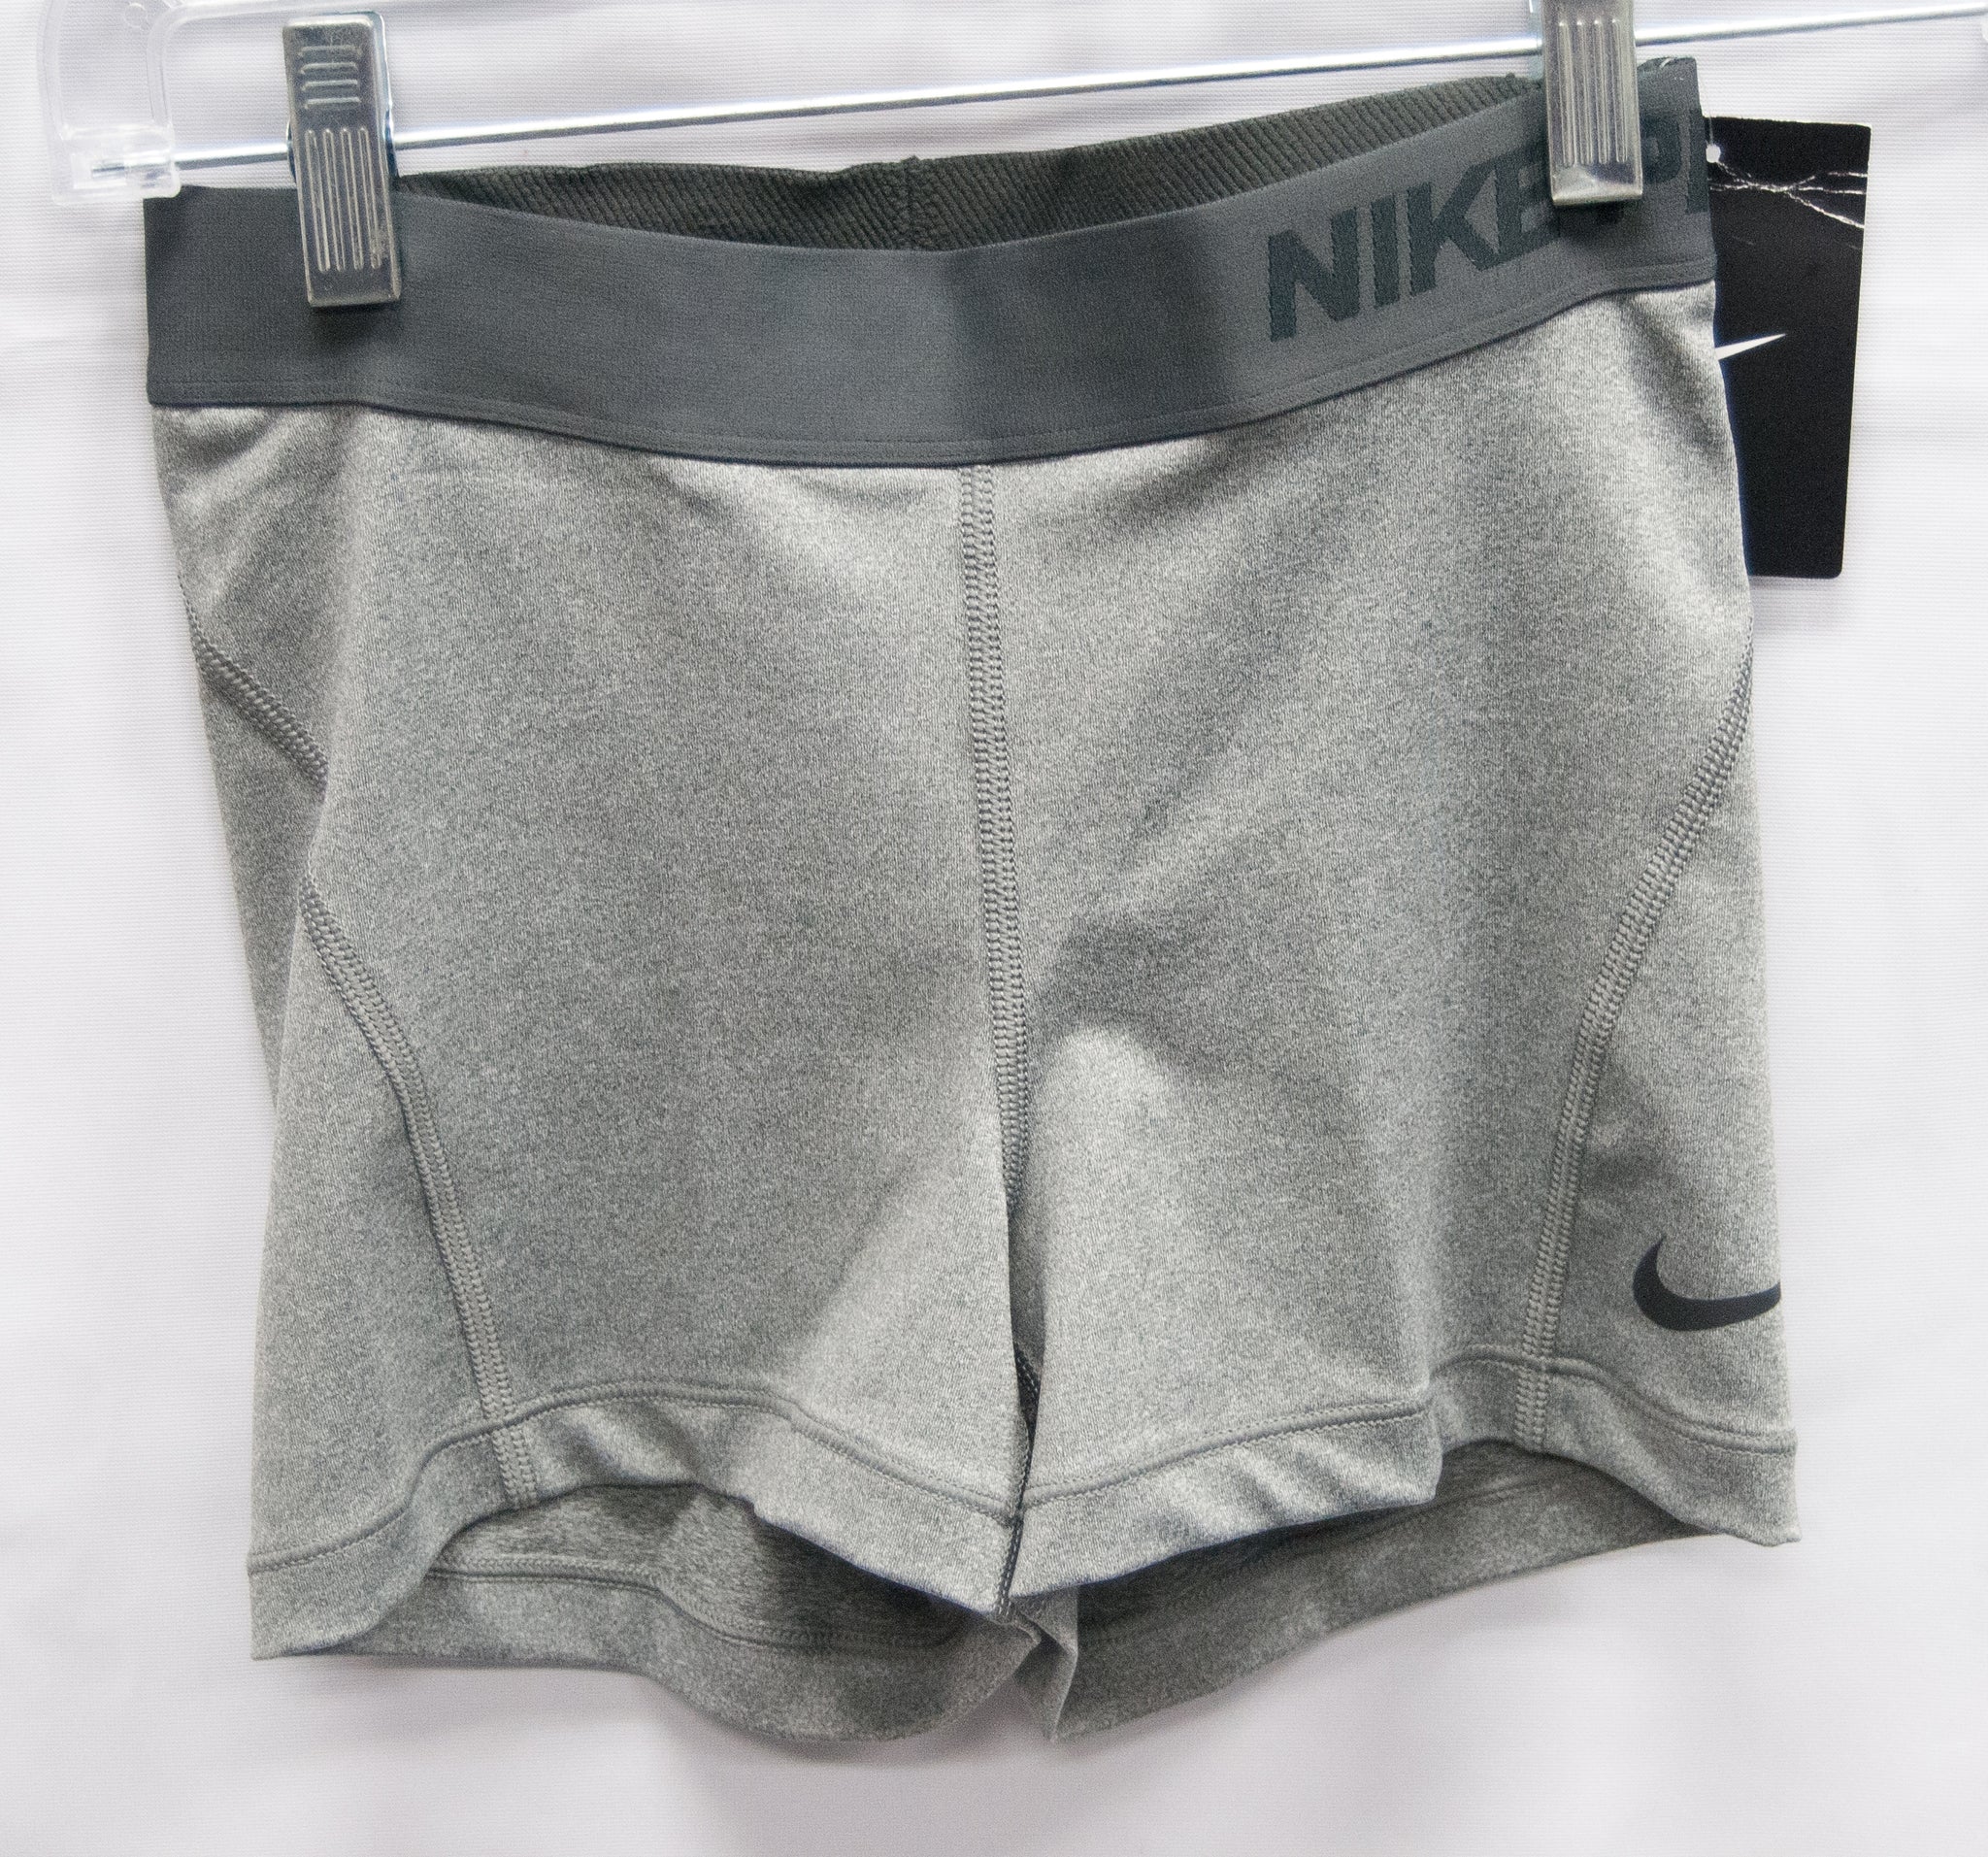 Clearance - Nike Spandex Shorts